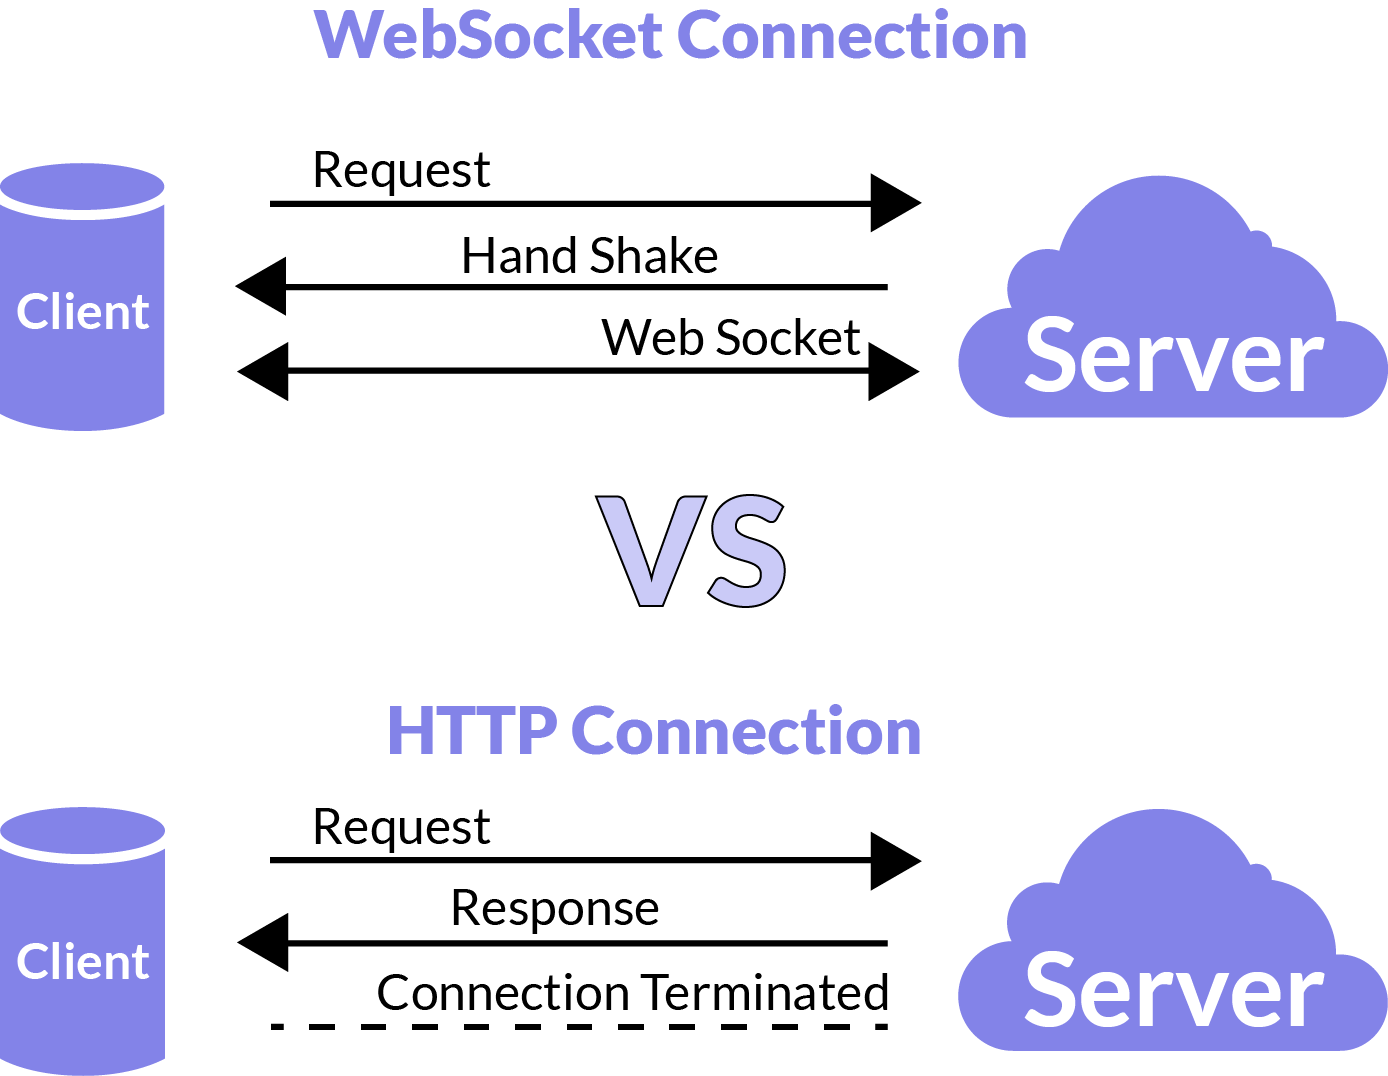 WebSocket vs HTTP Connection